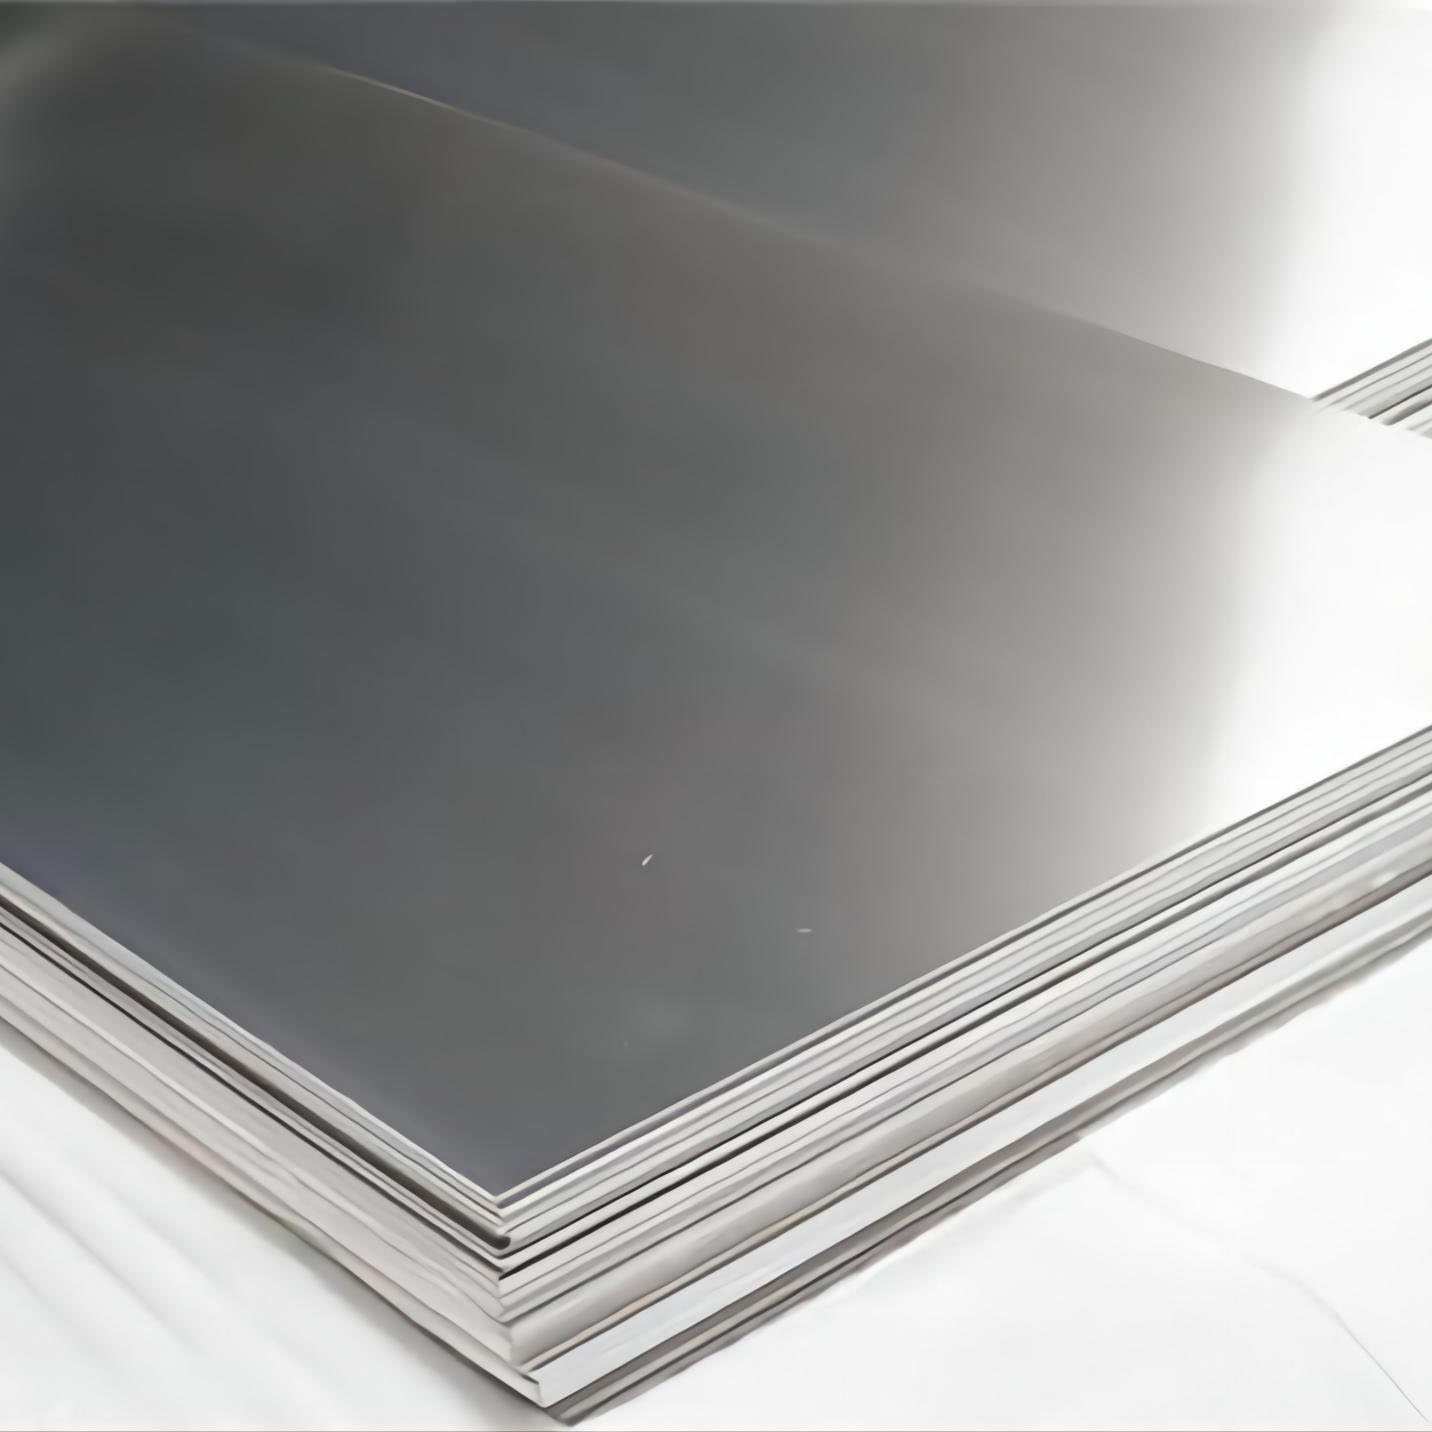 China Manufacture Supplier 1100 Aluminum Plate ຄຸນນະສົມບັດຮູບພາບ